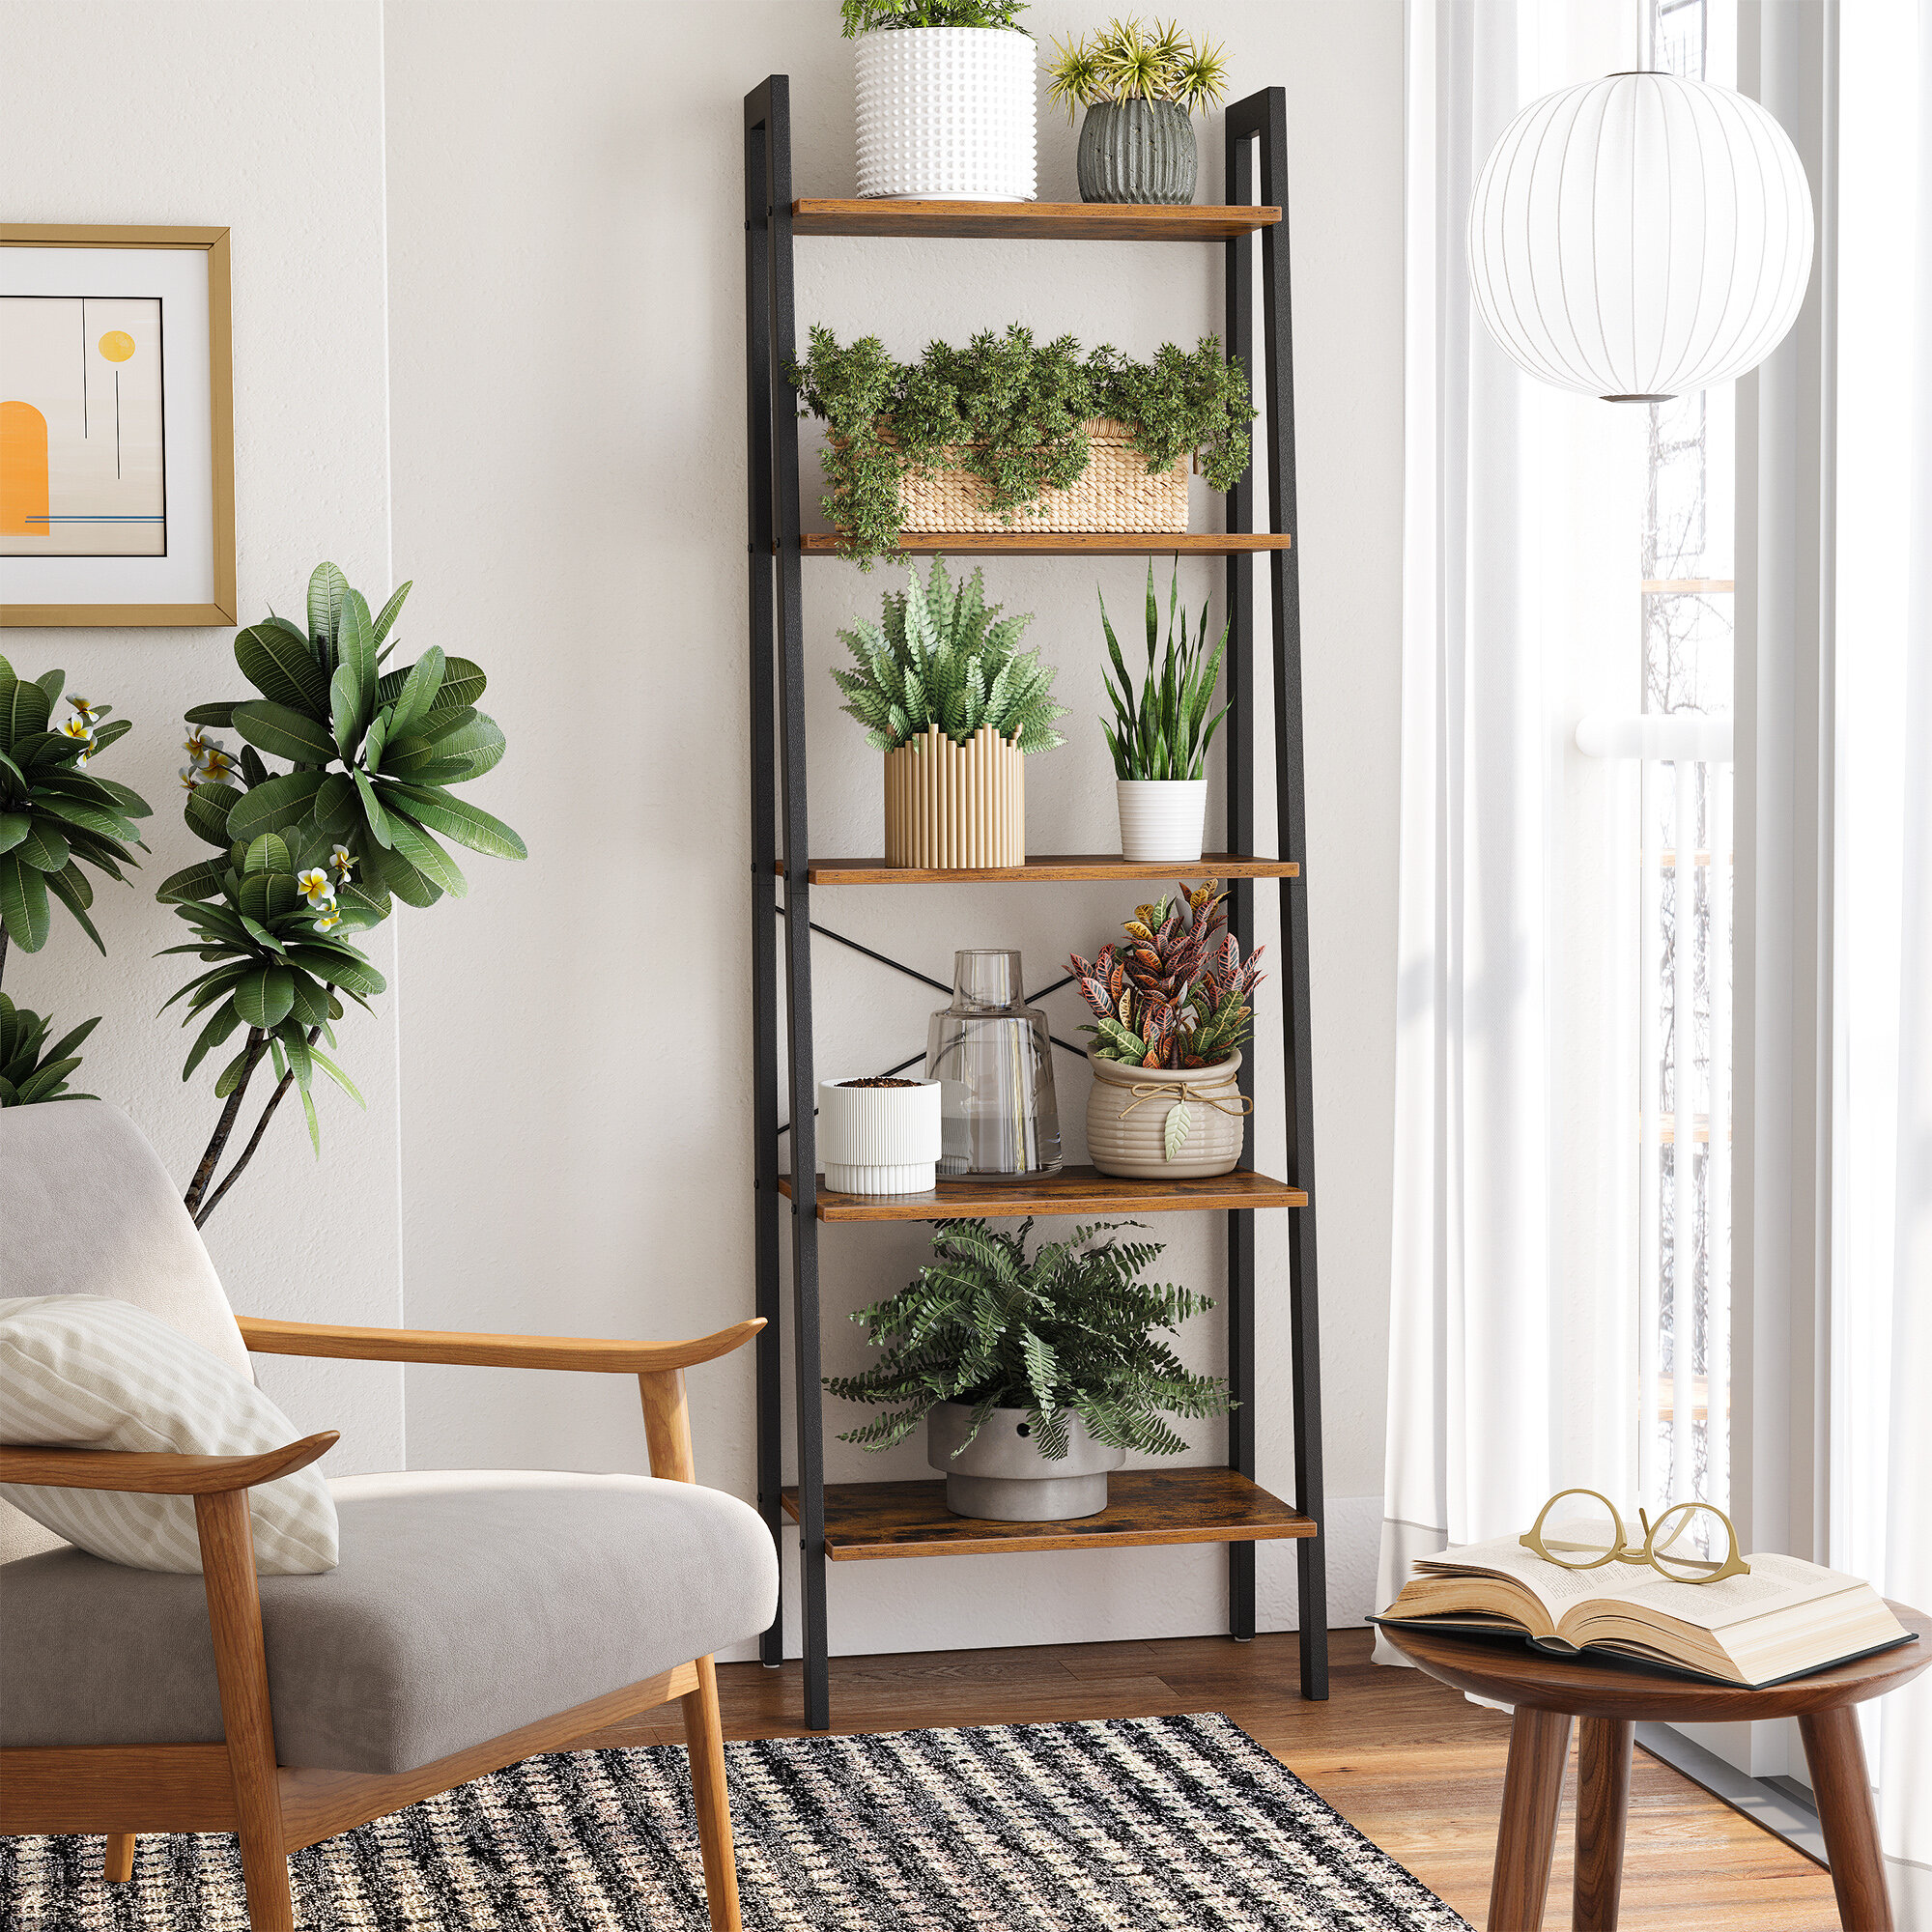 Lavish Home 5-Tier Ladder Bookshelf - Leaning Decorative Shelves, Black